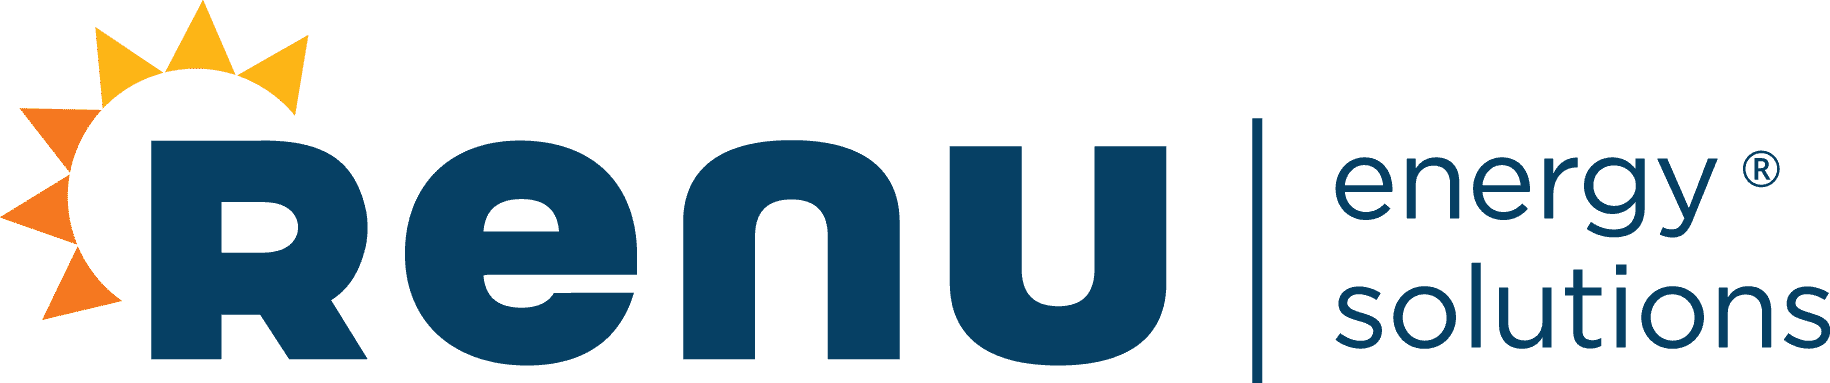 Renu Energy Solutions logo